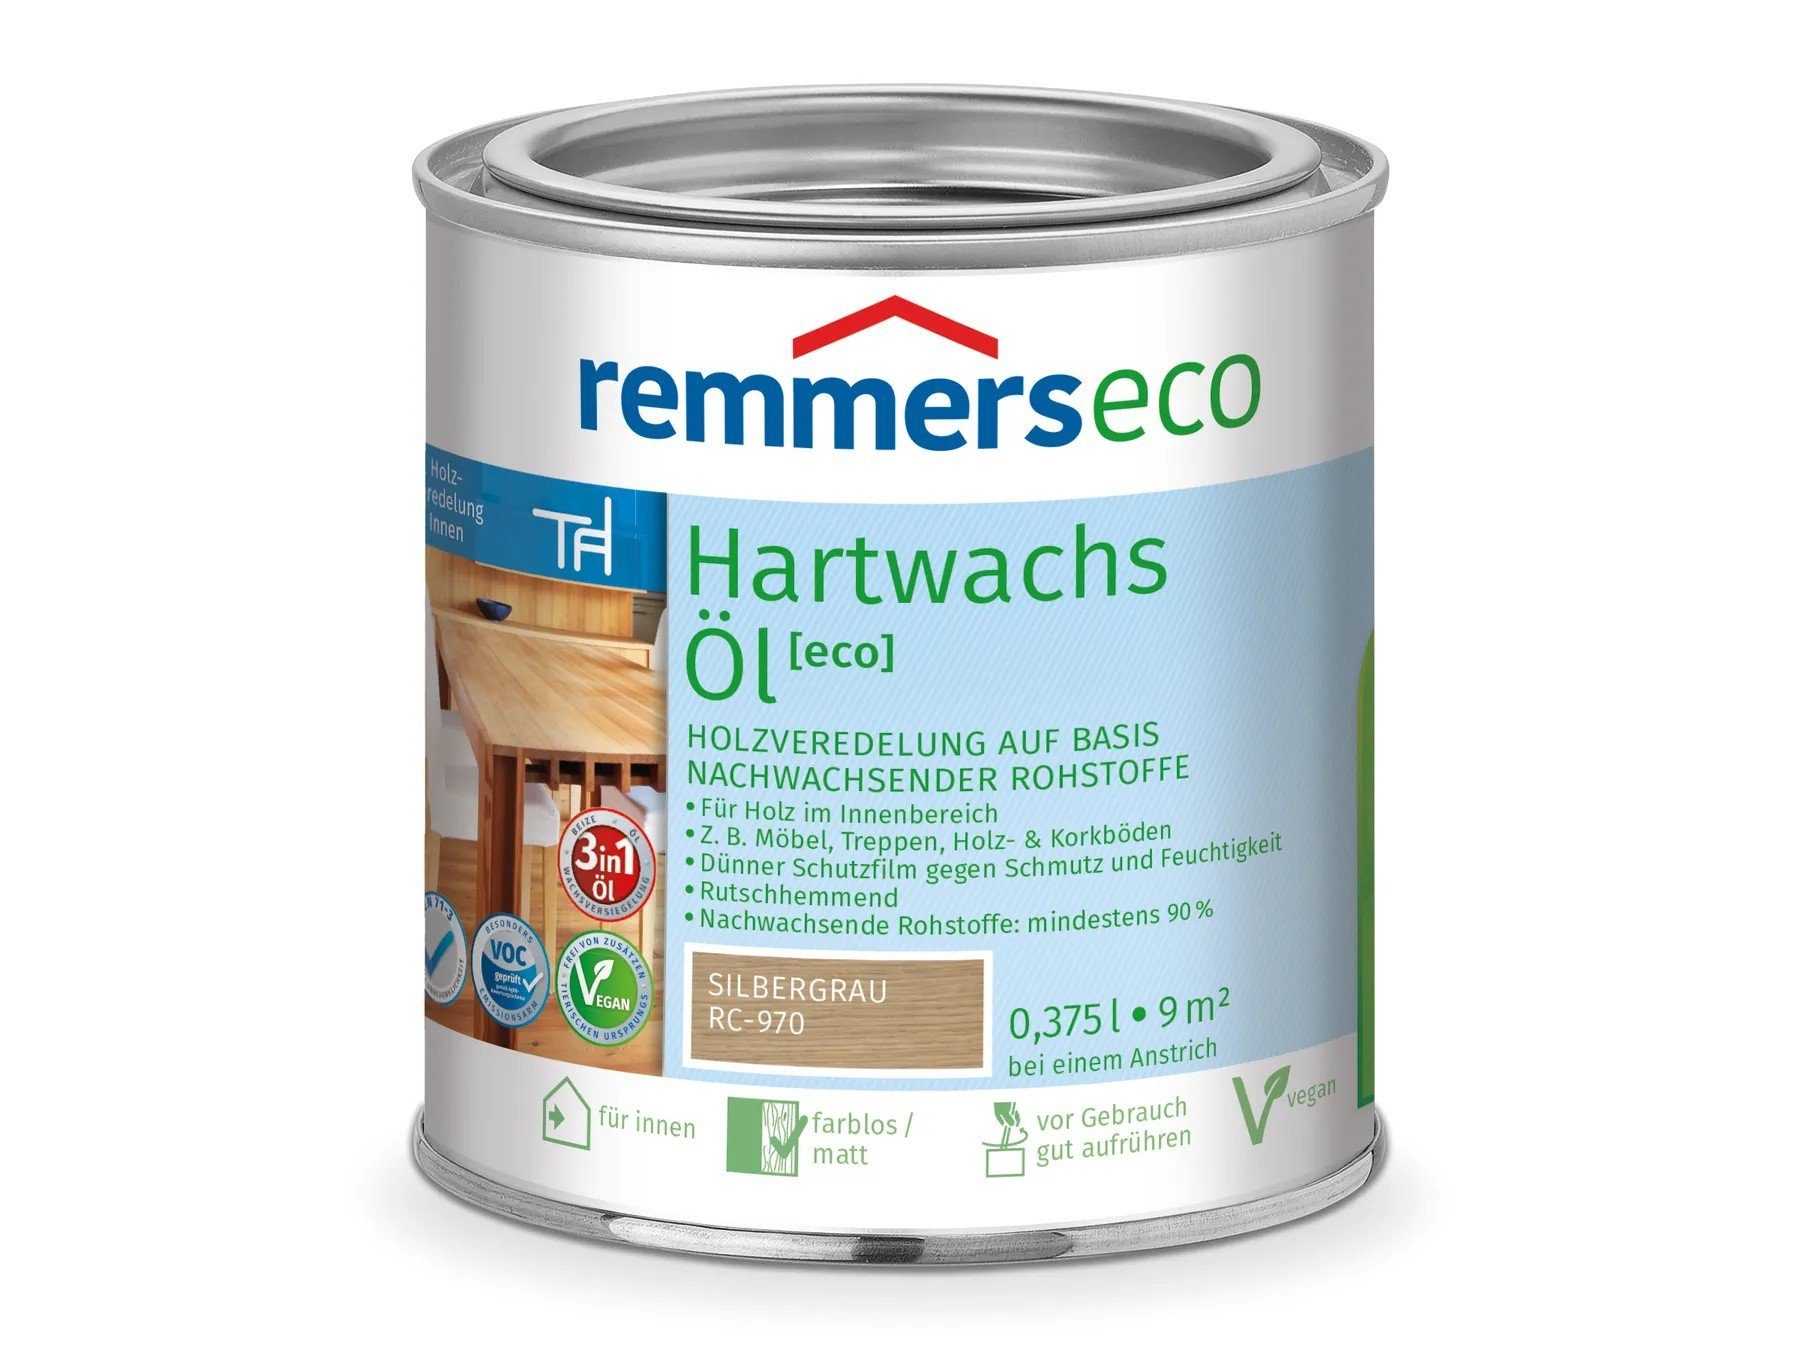 Remmers Hartwachsöl Hartwachs-Öl [eco] silbergrau (RC-970)